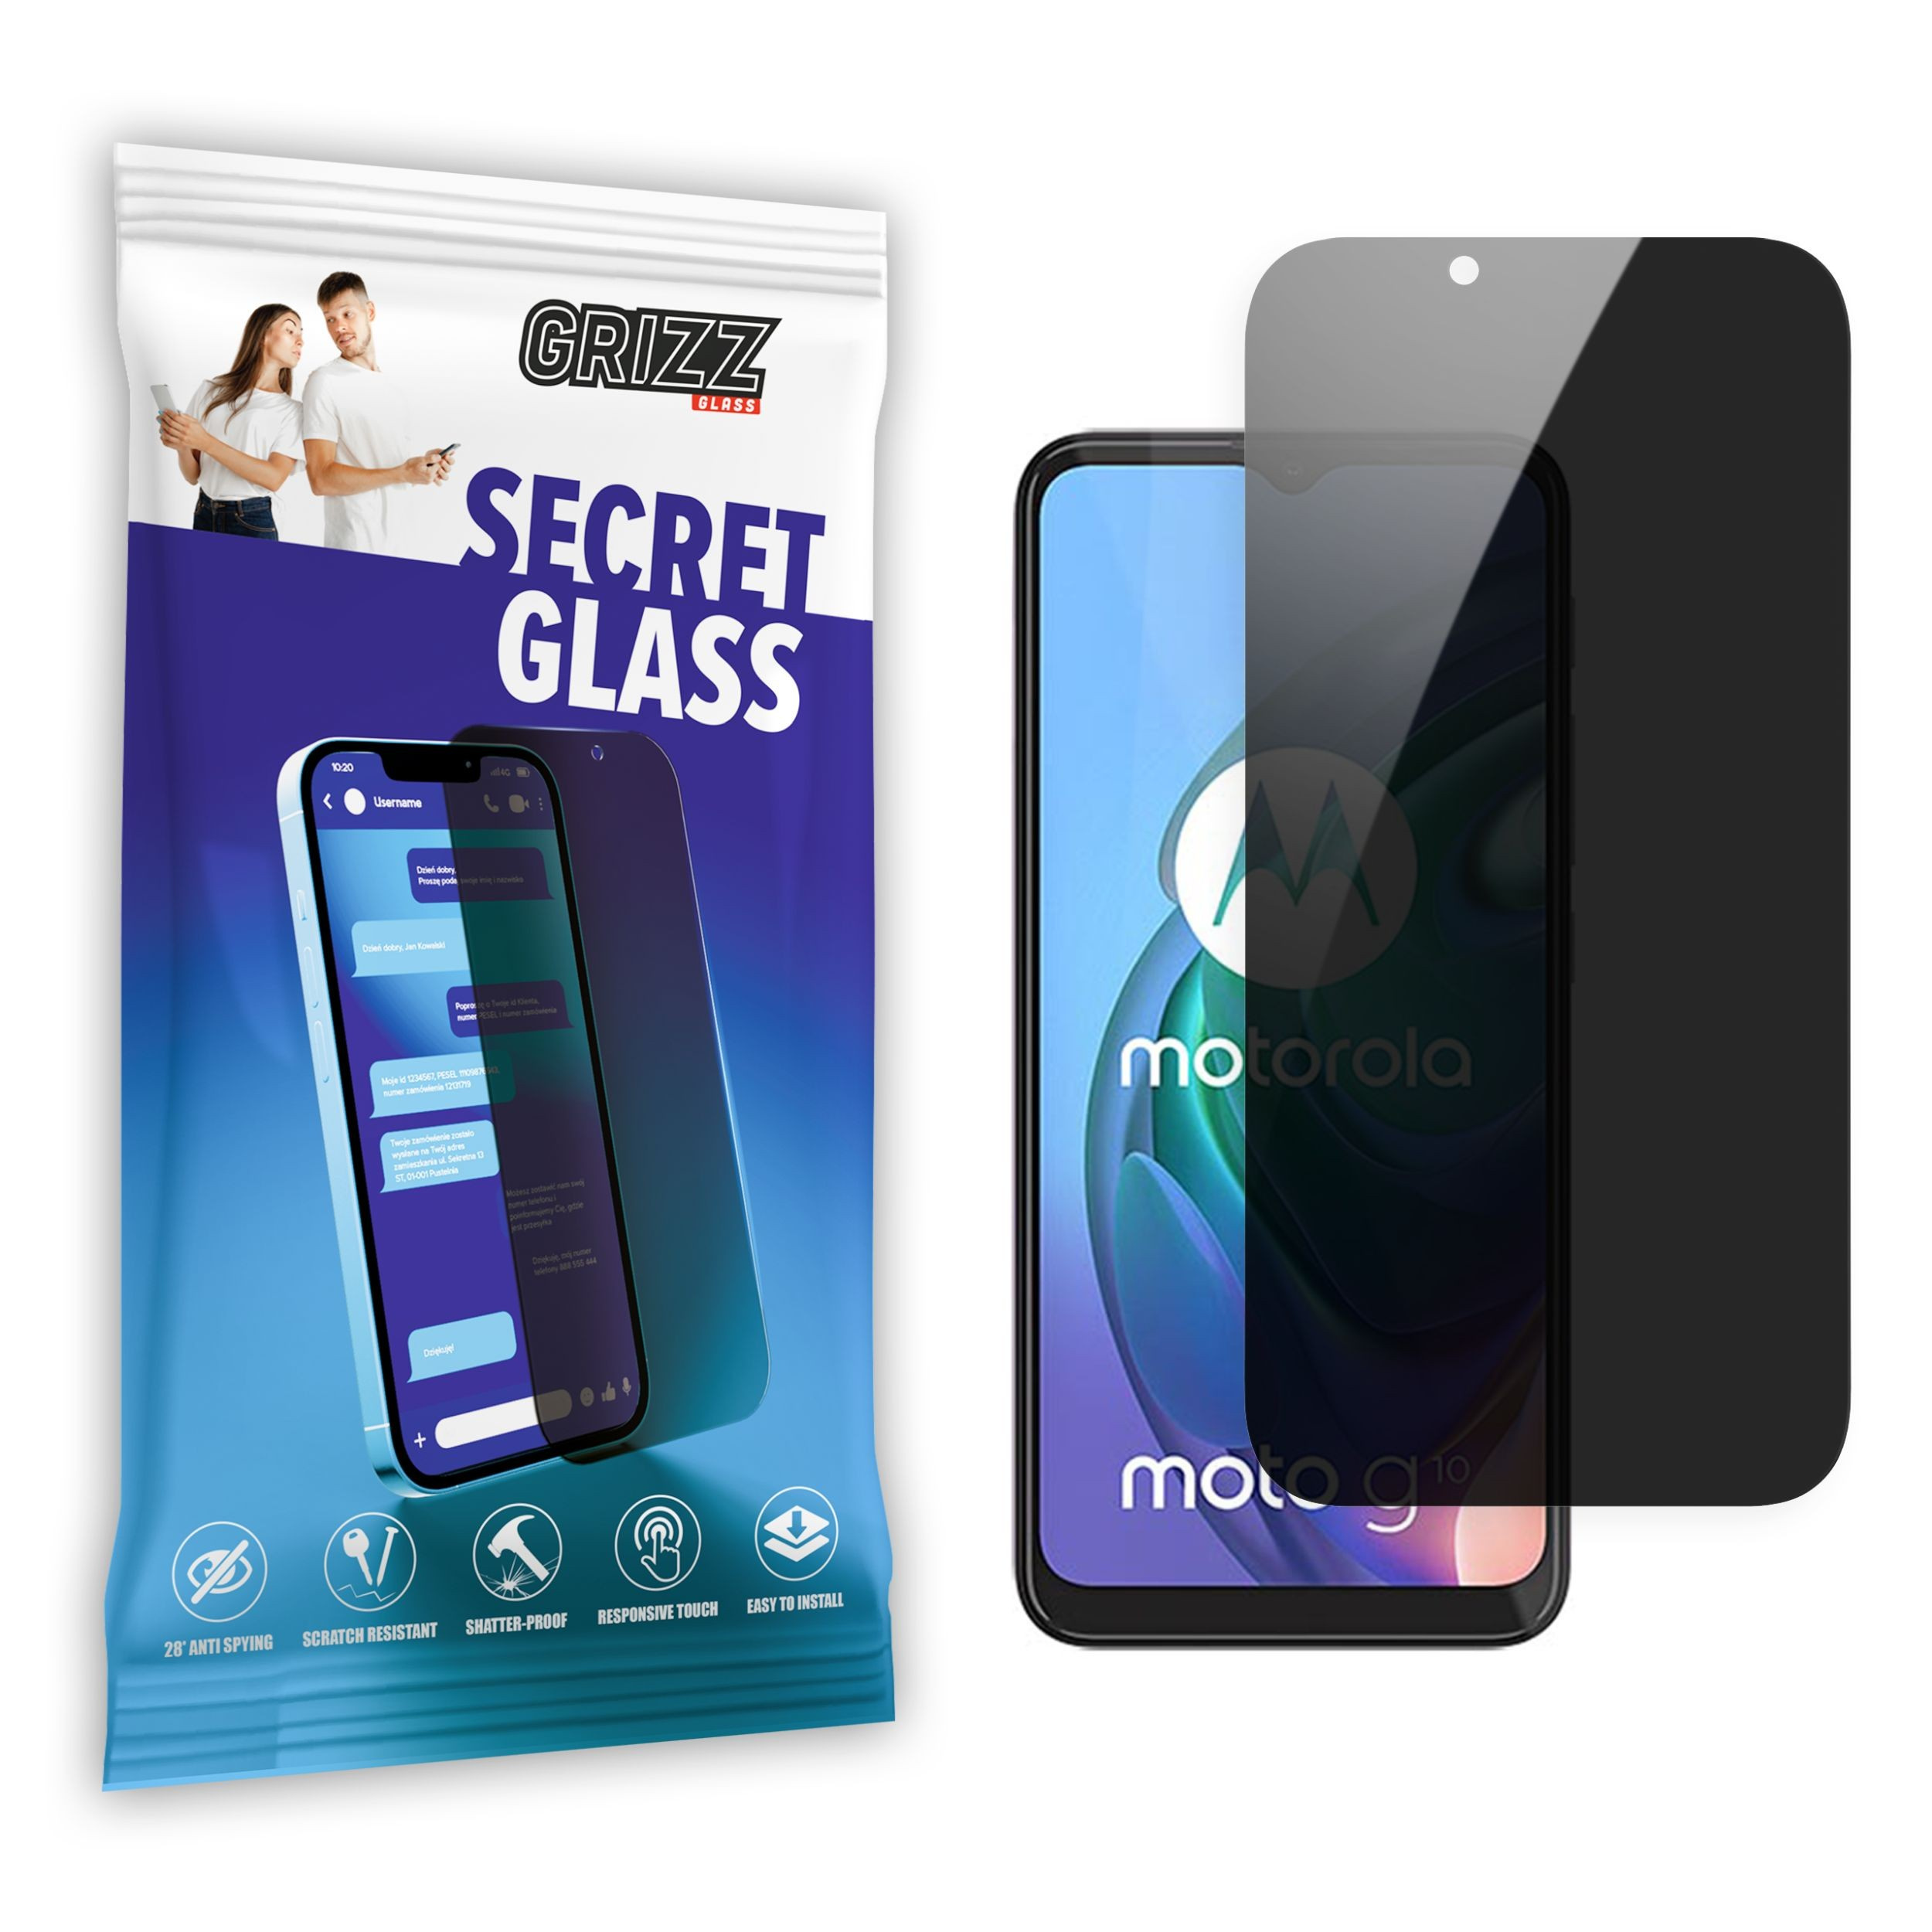 GrizzGlass SecretGlass Motorola Moto G10